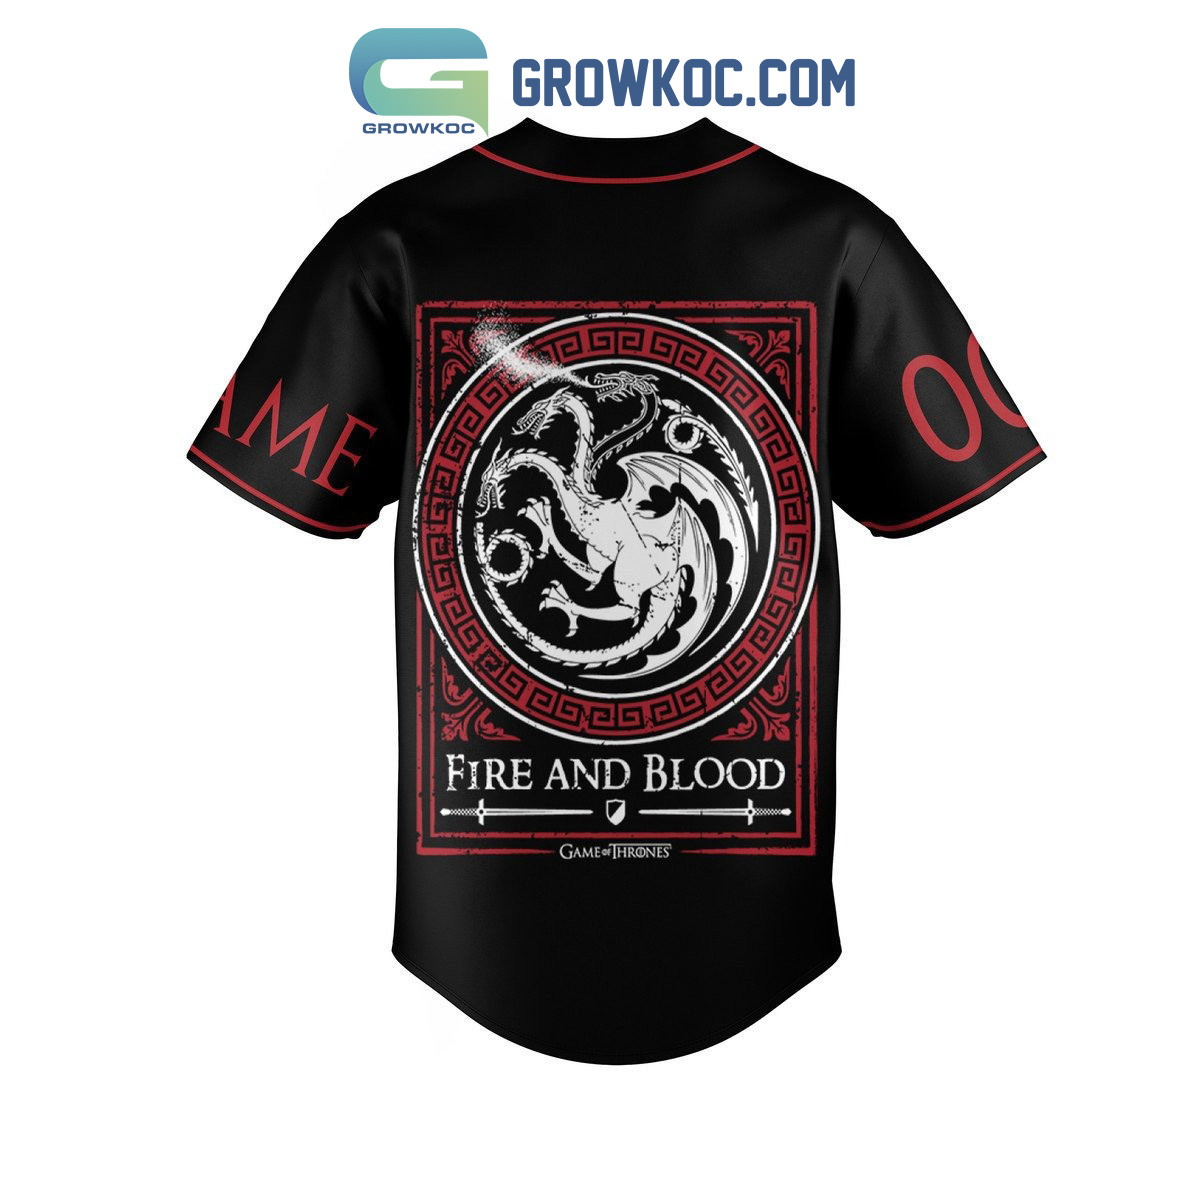 Men's Game of Thrones Targaryen Fire and Blood College Logo T